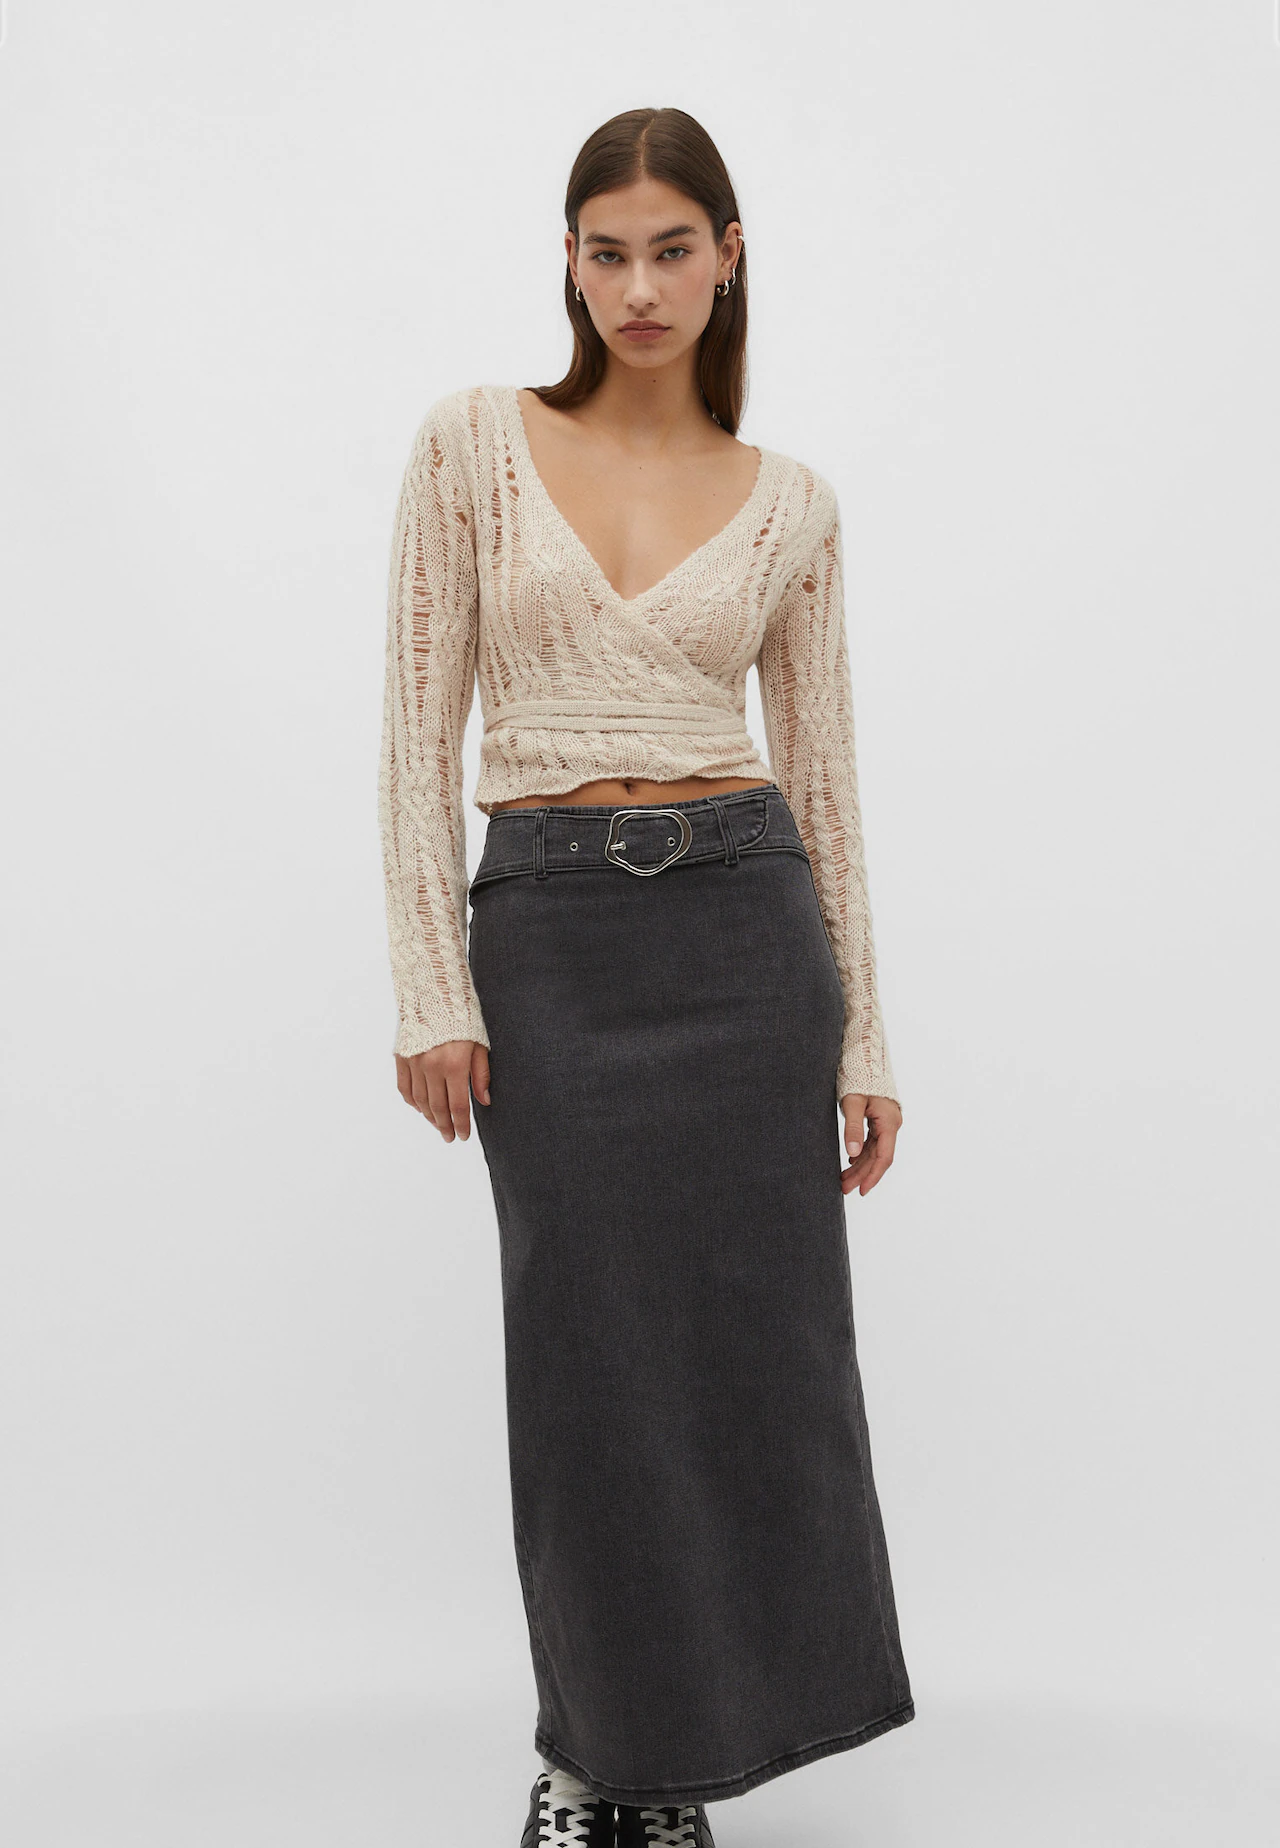 Belted denim maxi skirt - Women's fashion